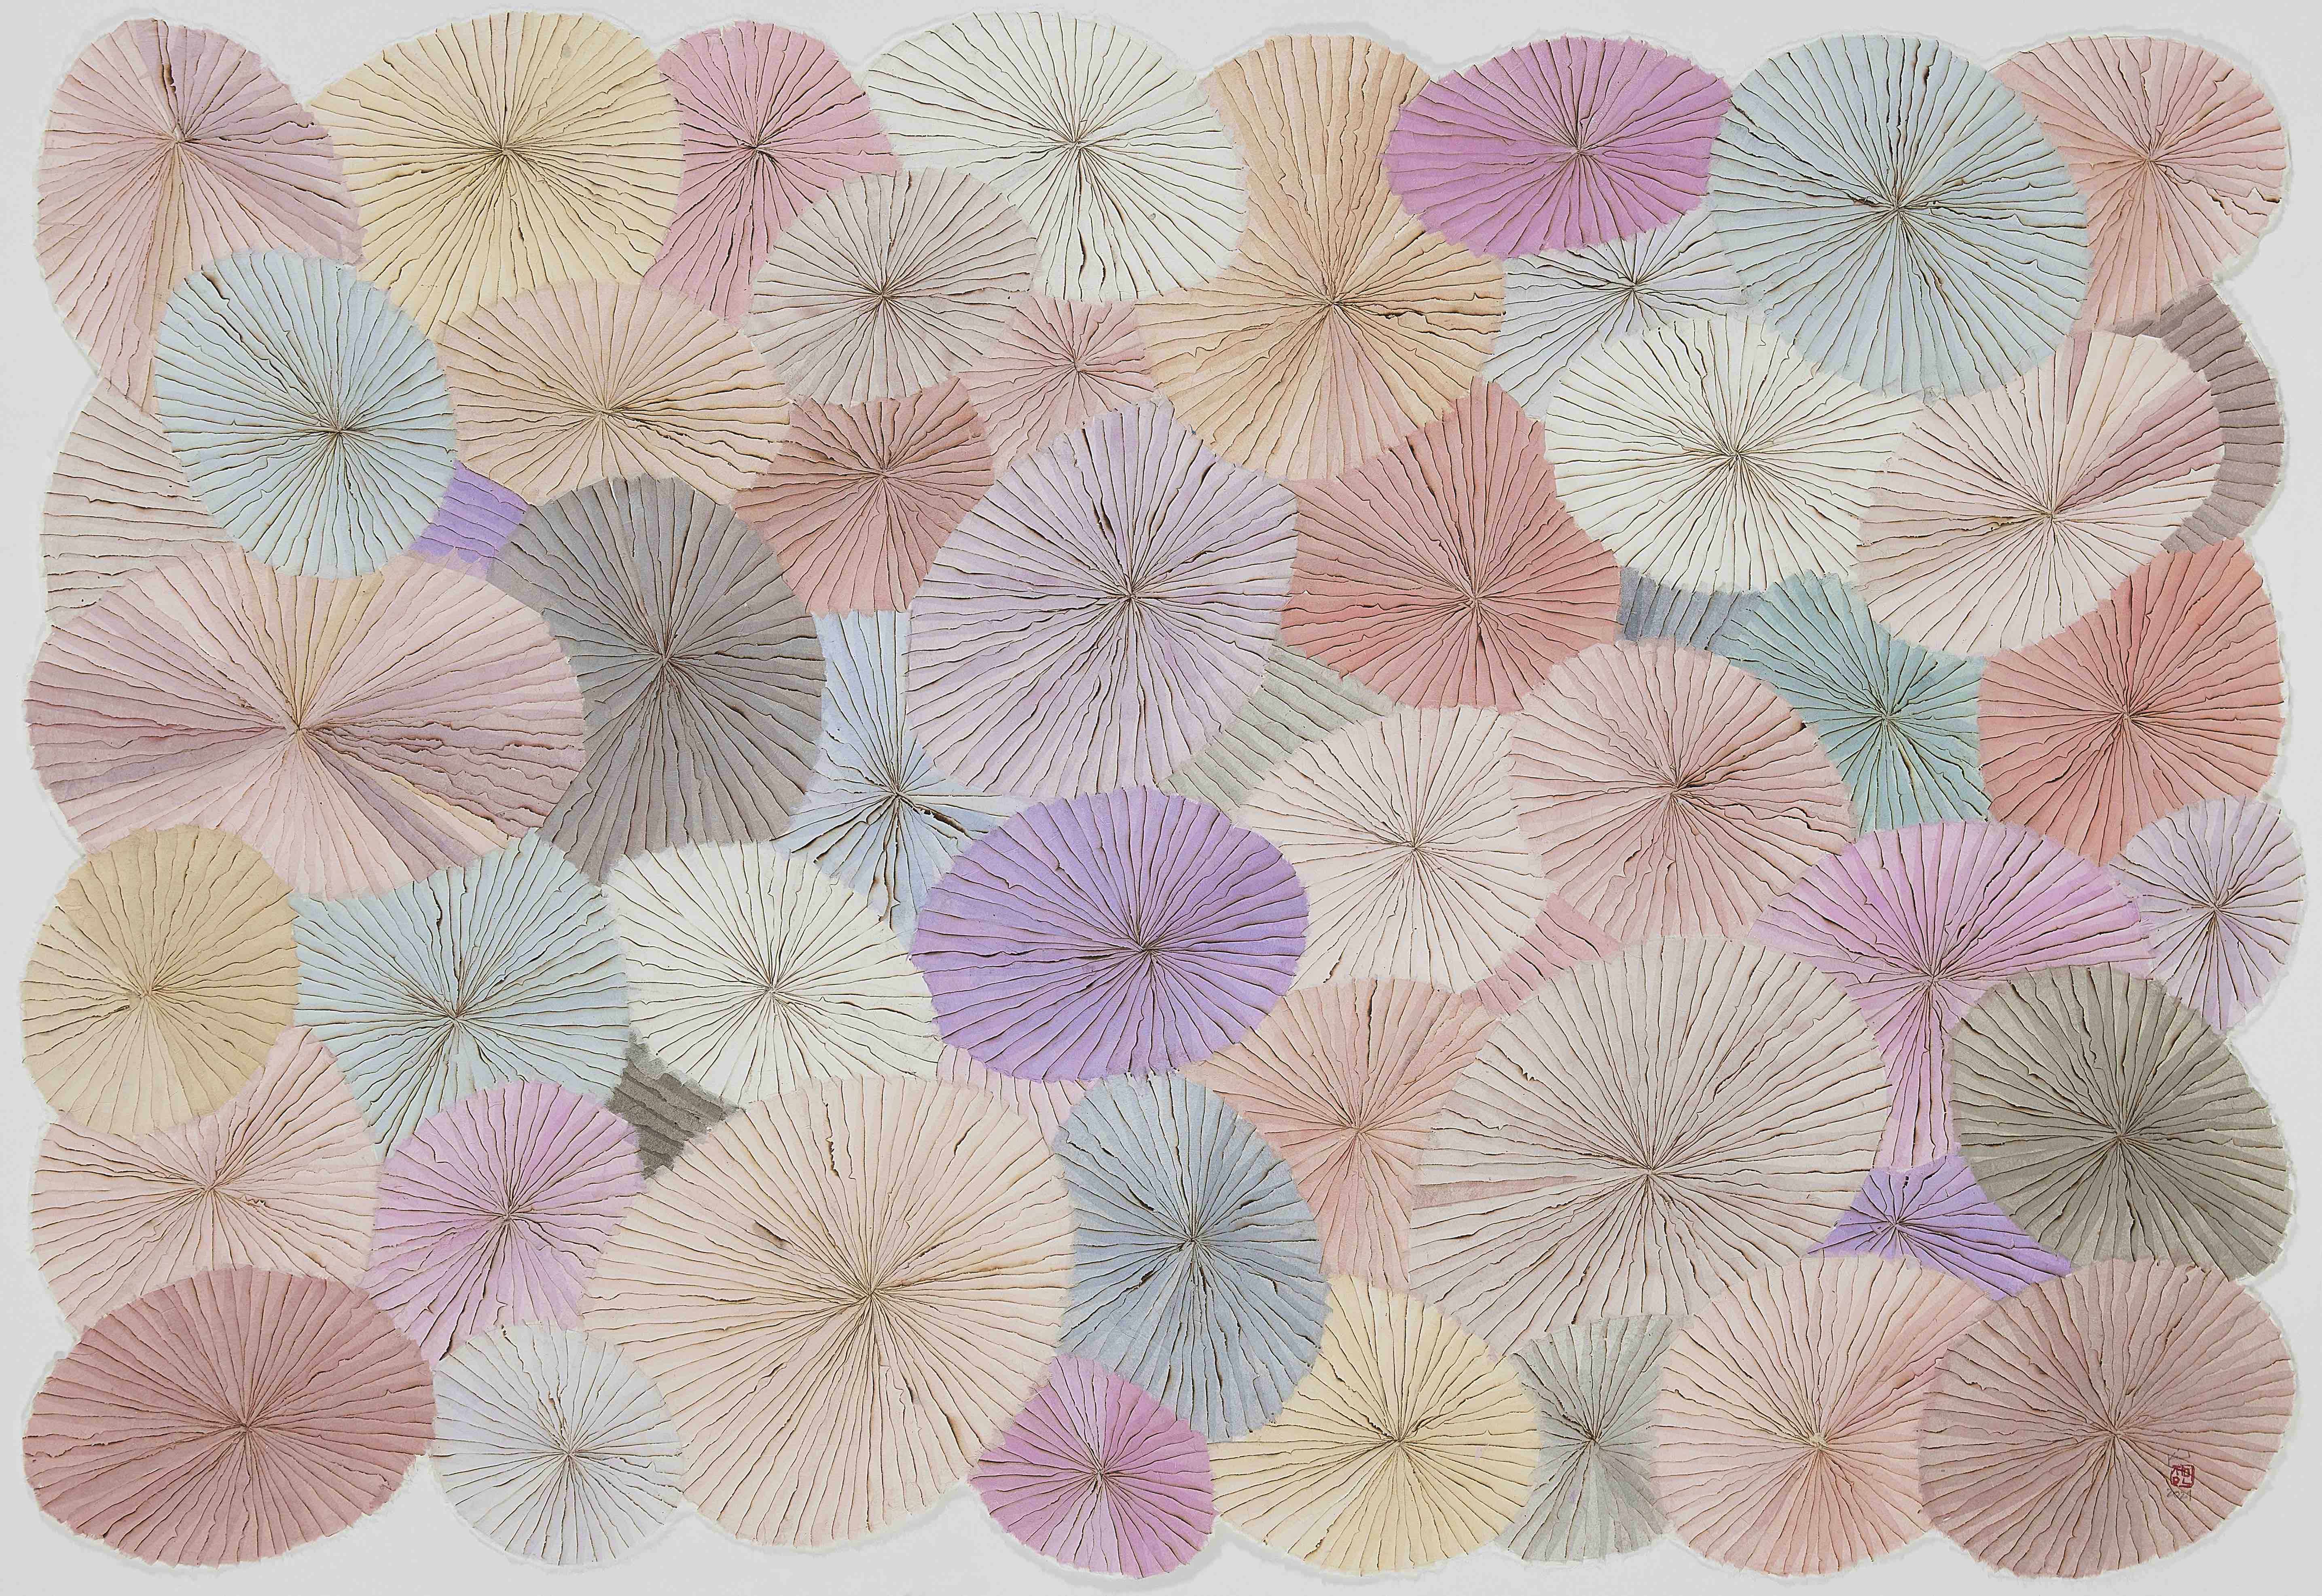 Minjung Kim, The Street (21-017), Mixed media on mulberry Hanji paper, 98 x 140 cm, 2021